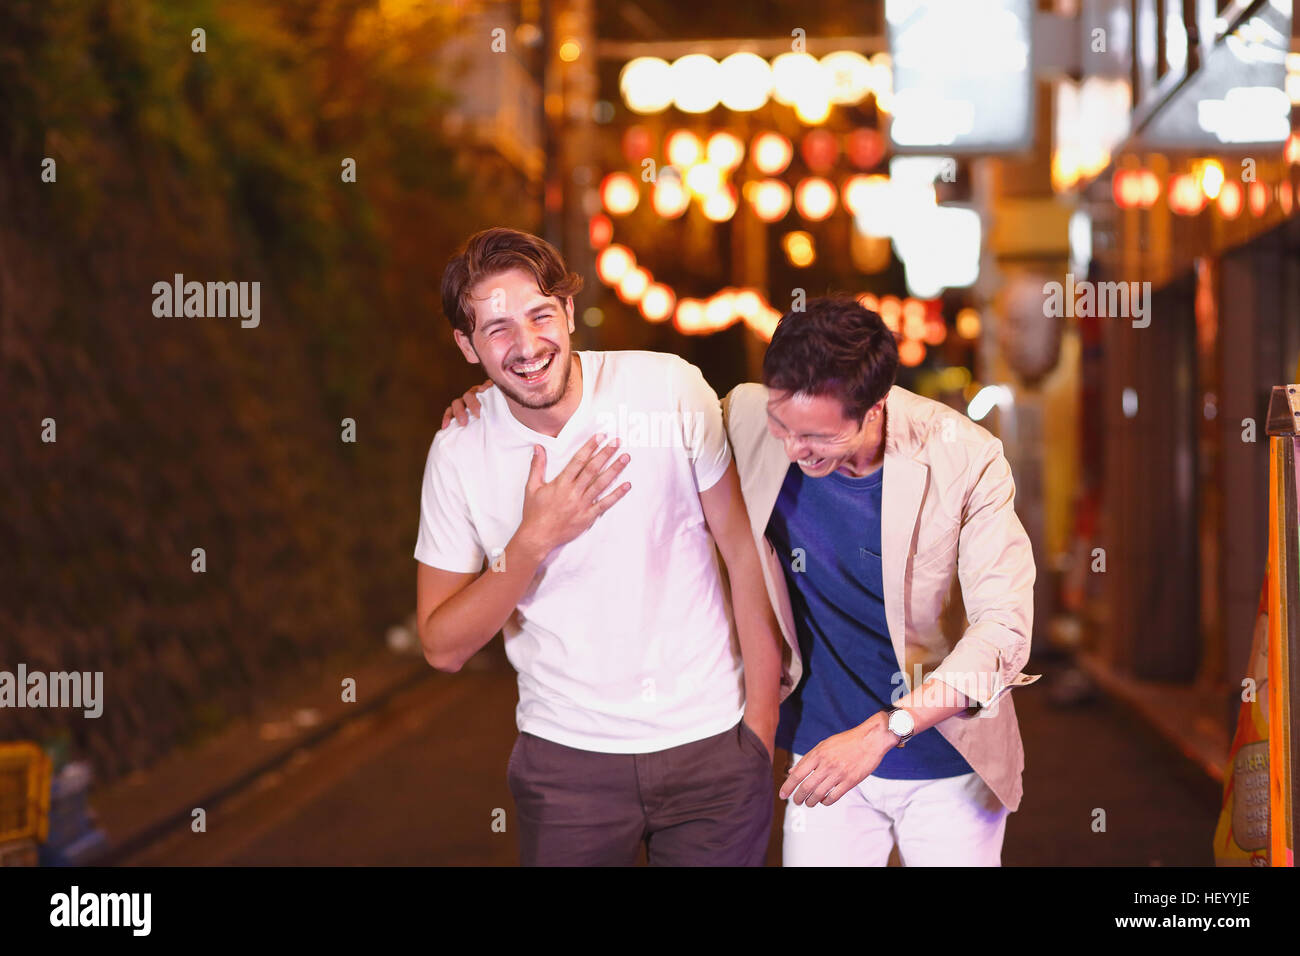 Caucasian man enjoying nightlife in Tokyo with Japanese friend, Japan Stock Photo